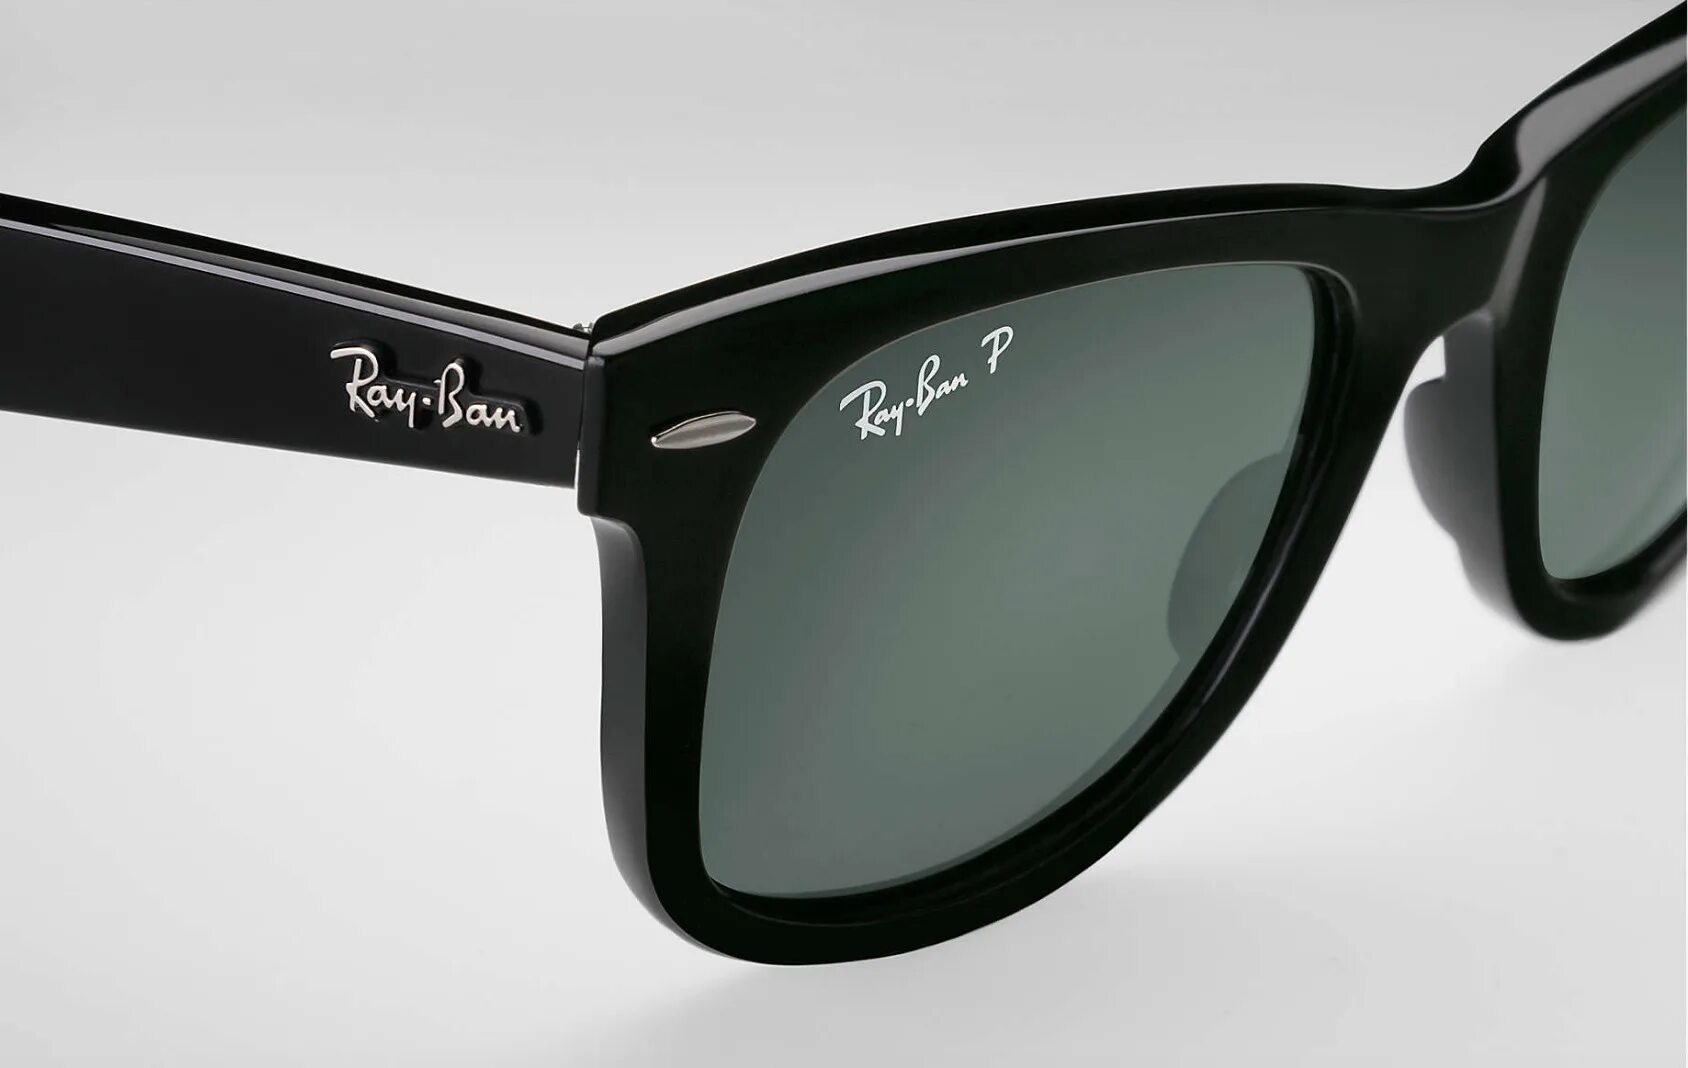 Sunglasses buy. Ray ban rb5449. Очки ray ban Wayfarer. Ray ban очки rb3561. Ray-ban солнцезащитные очки rb4306.